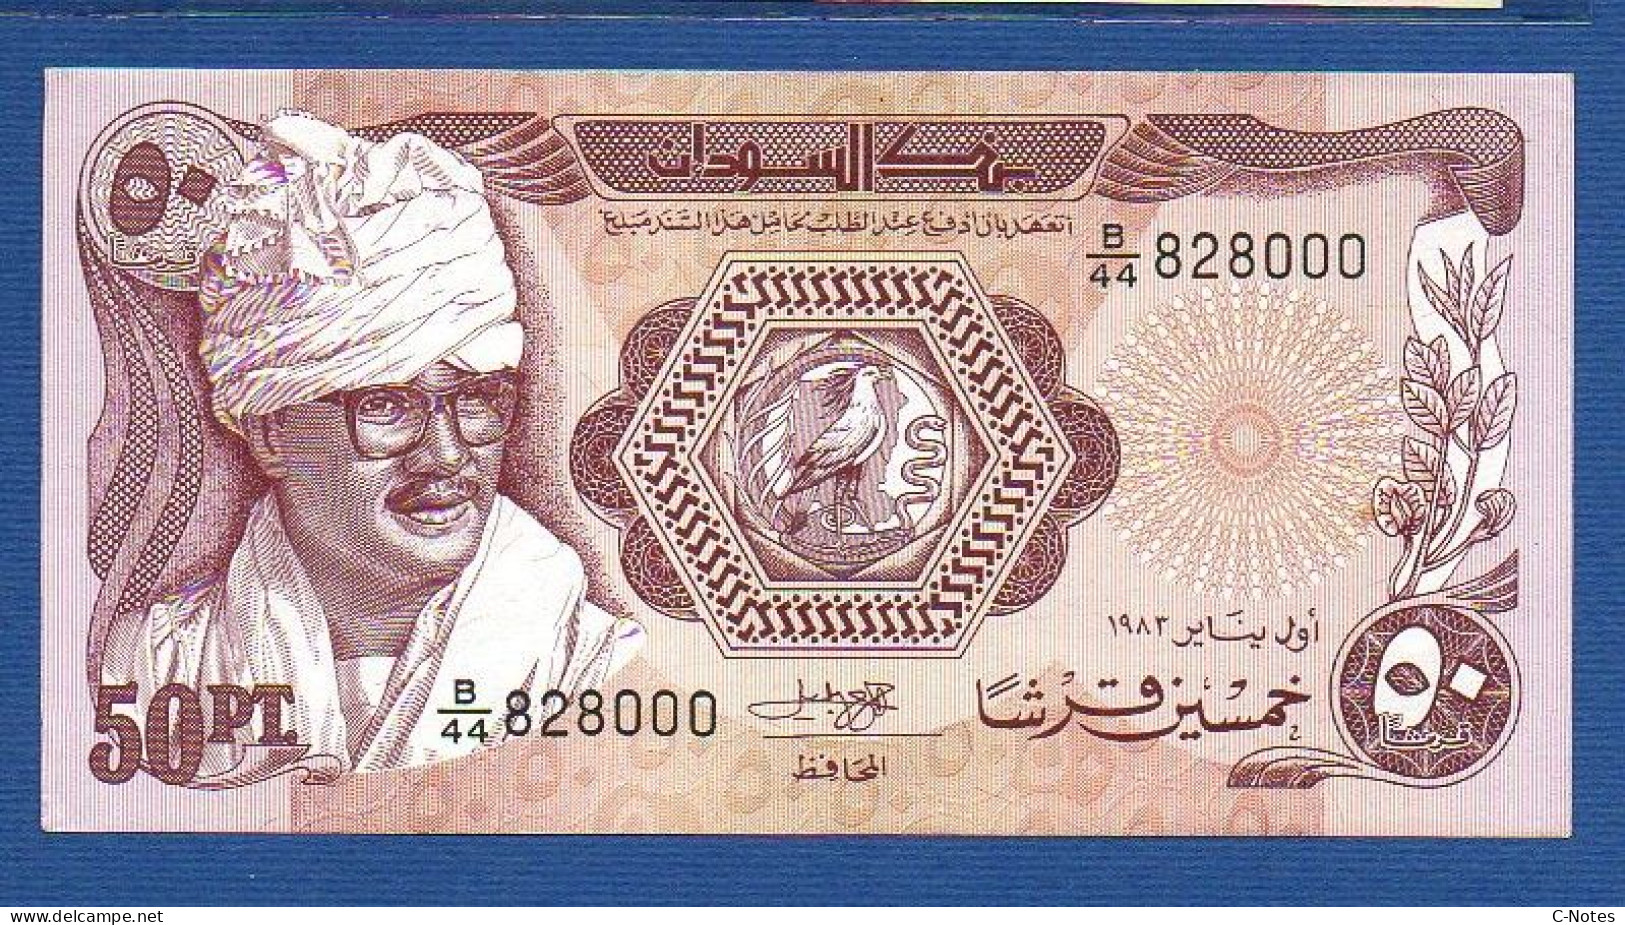 SUDAN - P.24 – 50 Piastres 1983 AUNC, S/n B/44 828000 - Soudan